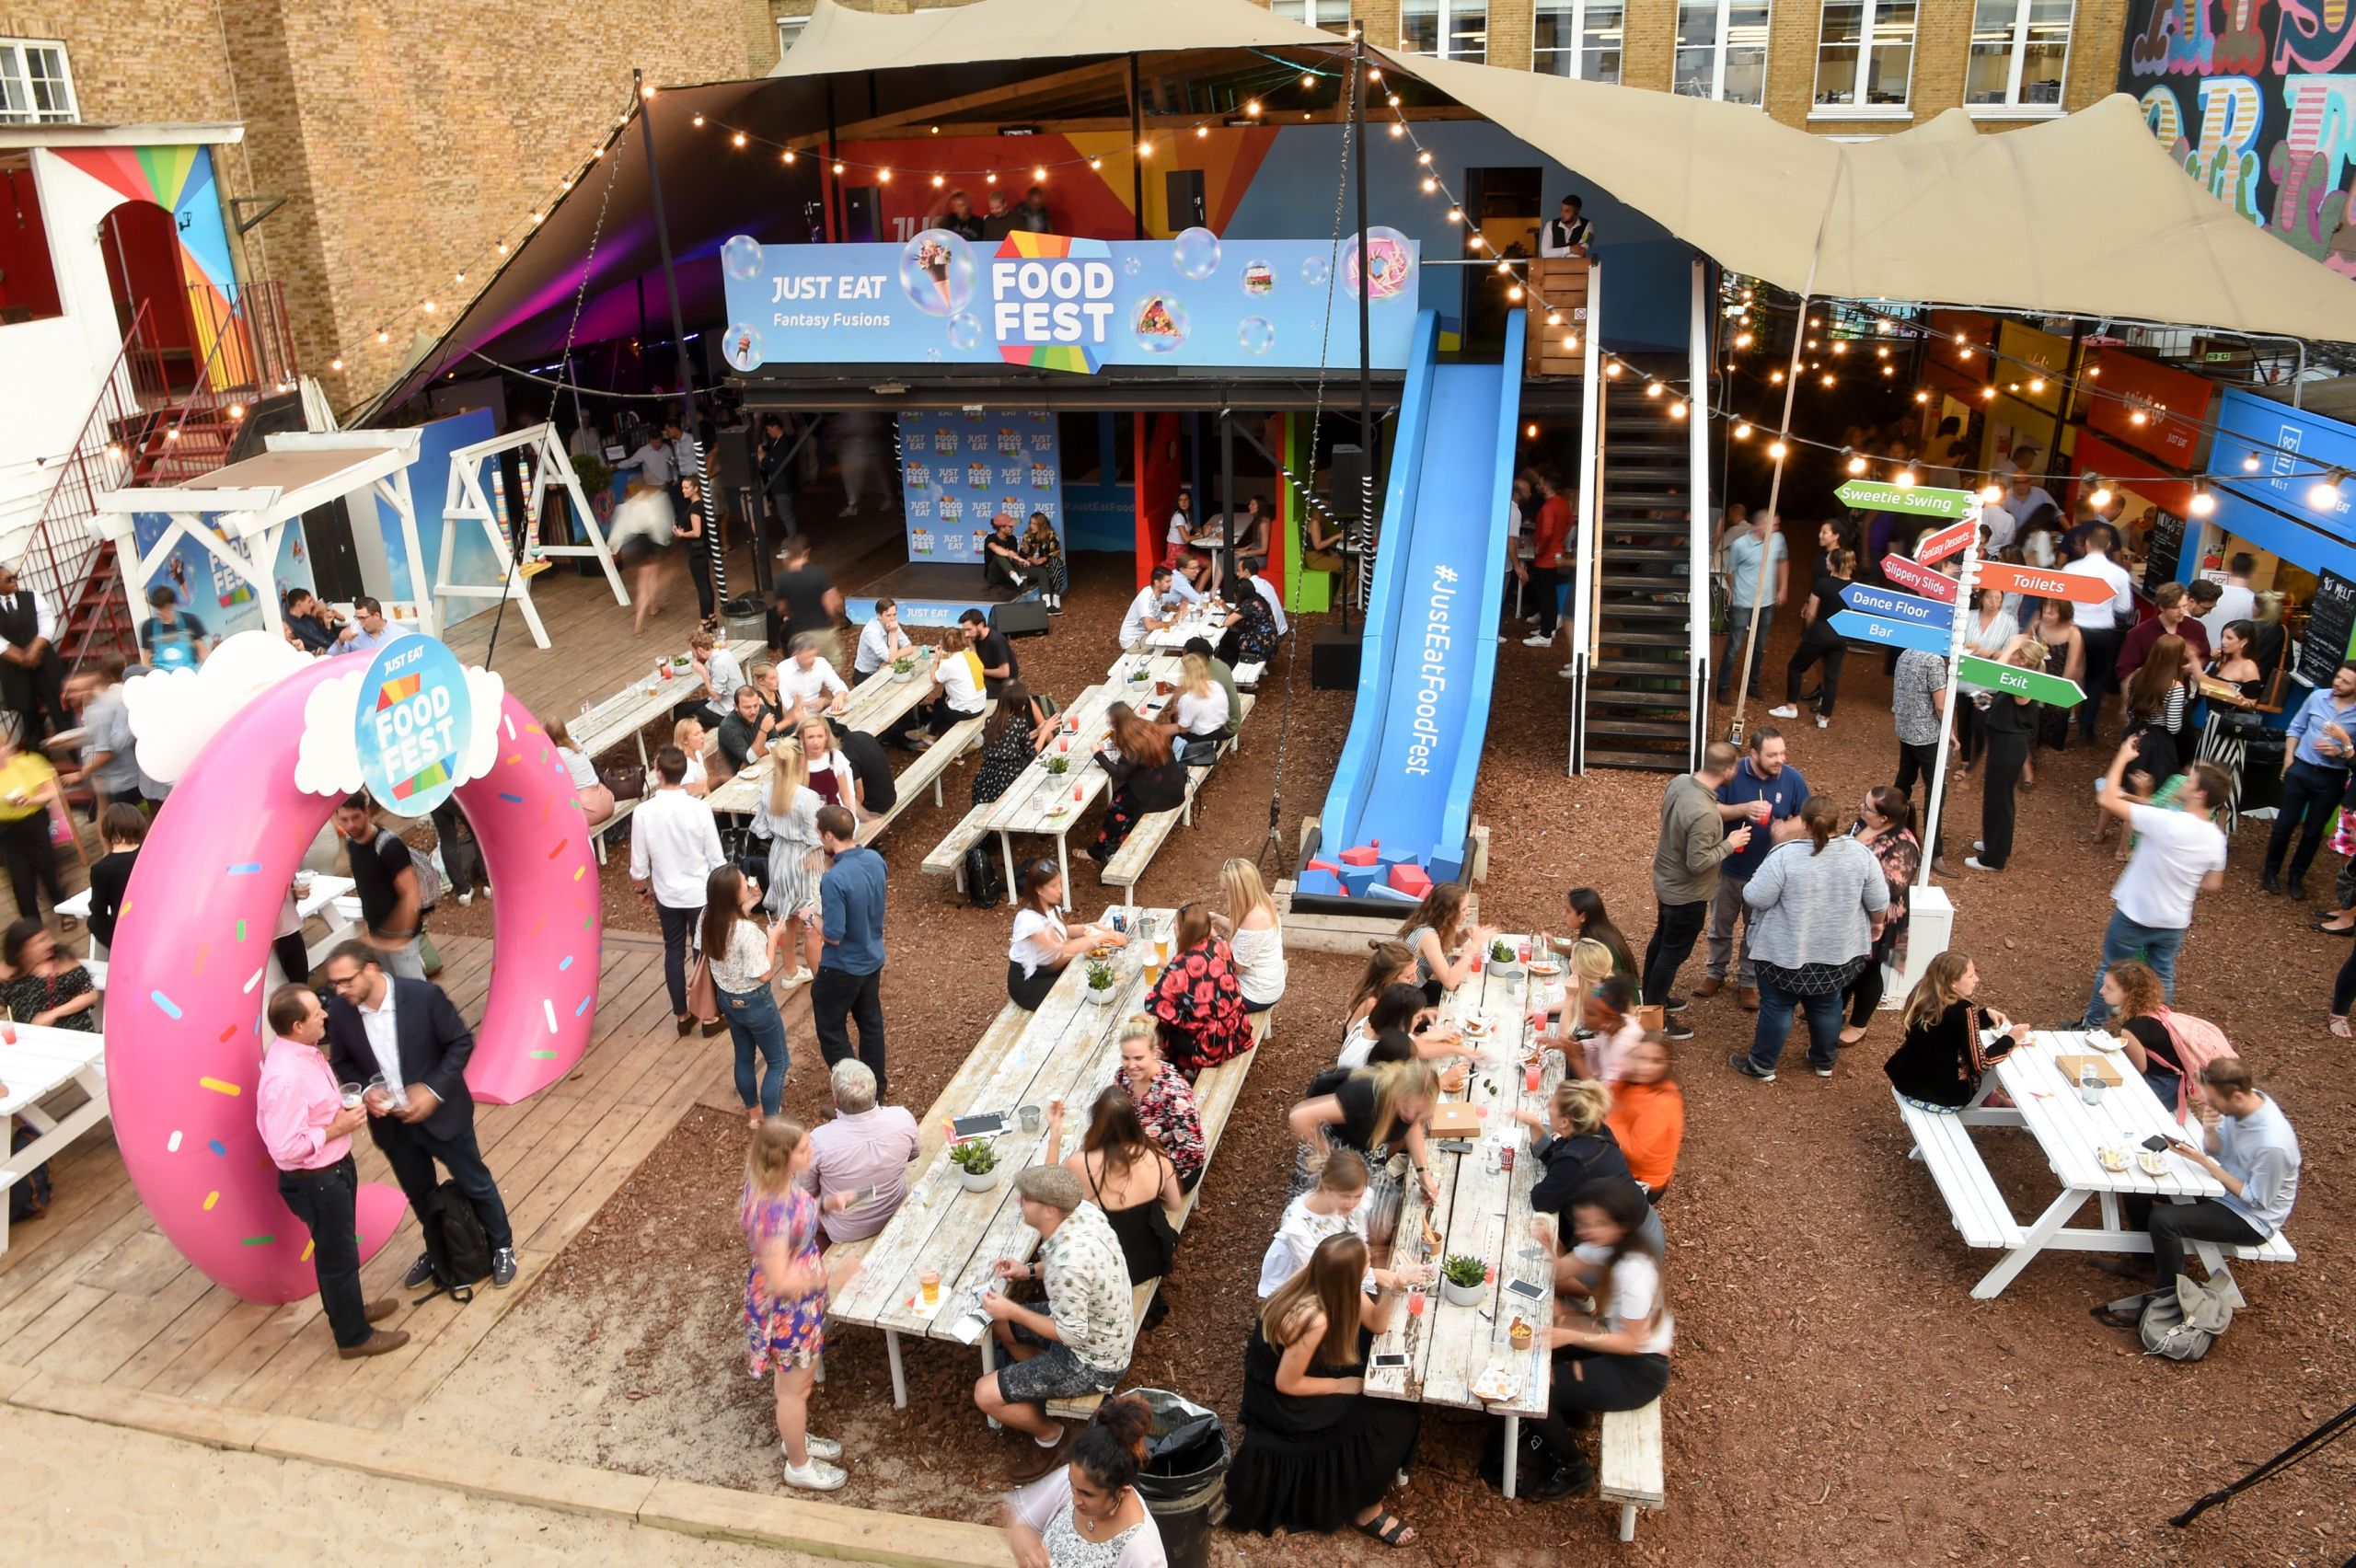 Summer Food Festival
 Just Eat brings Taste Adventure’ food festival to London